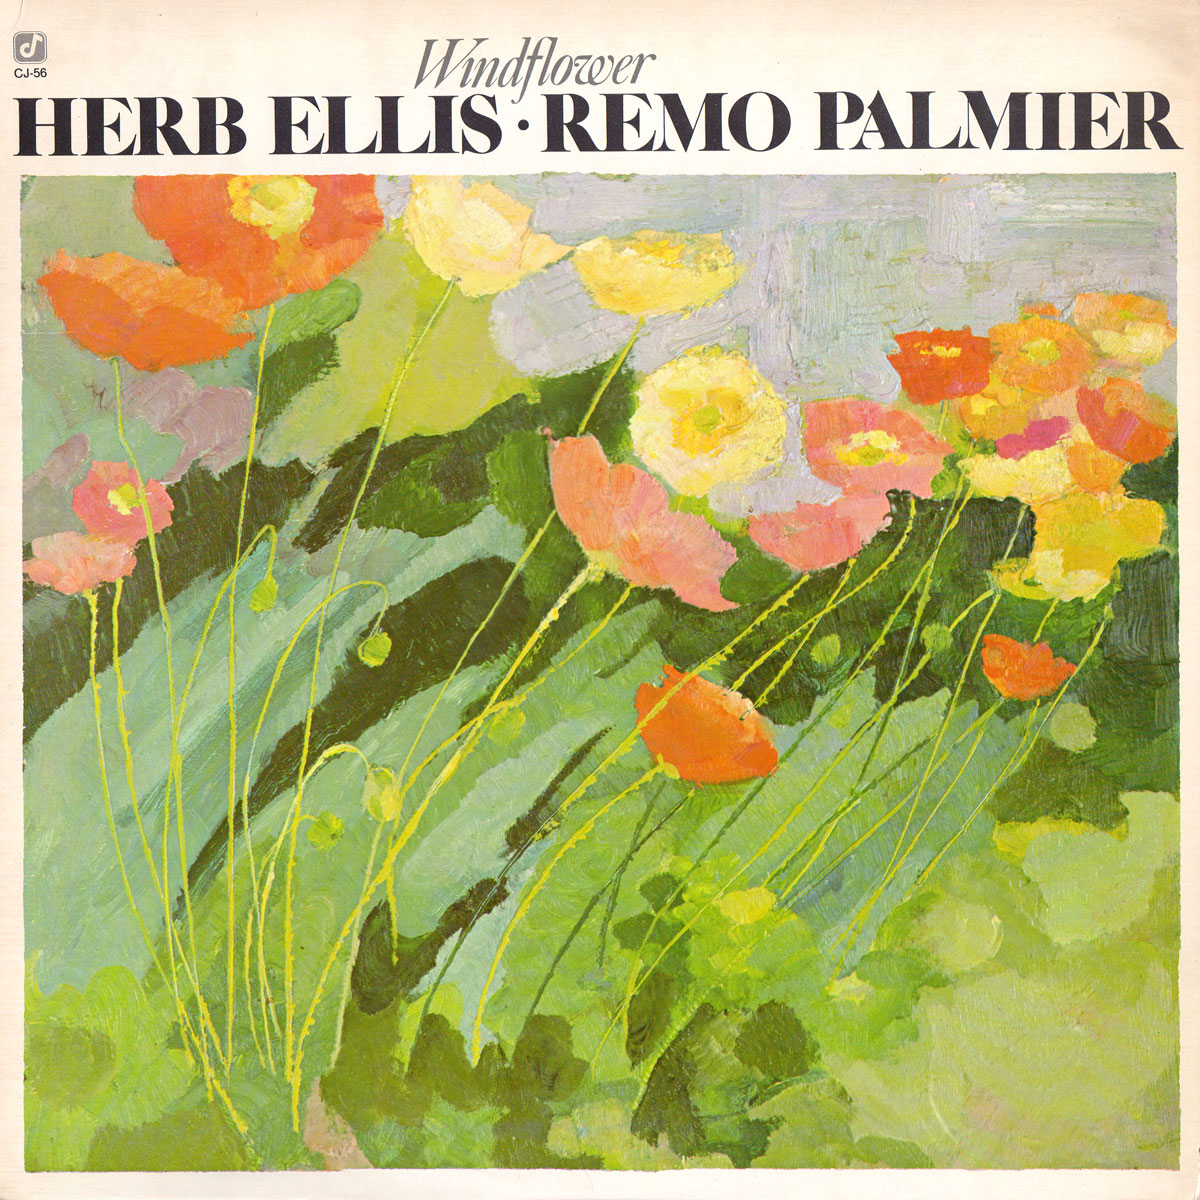 Herb Ellis, Remo Palmier - Windflower - Front cover